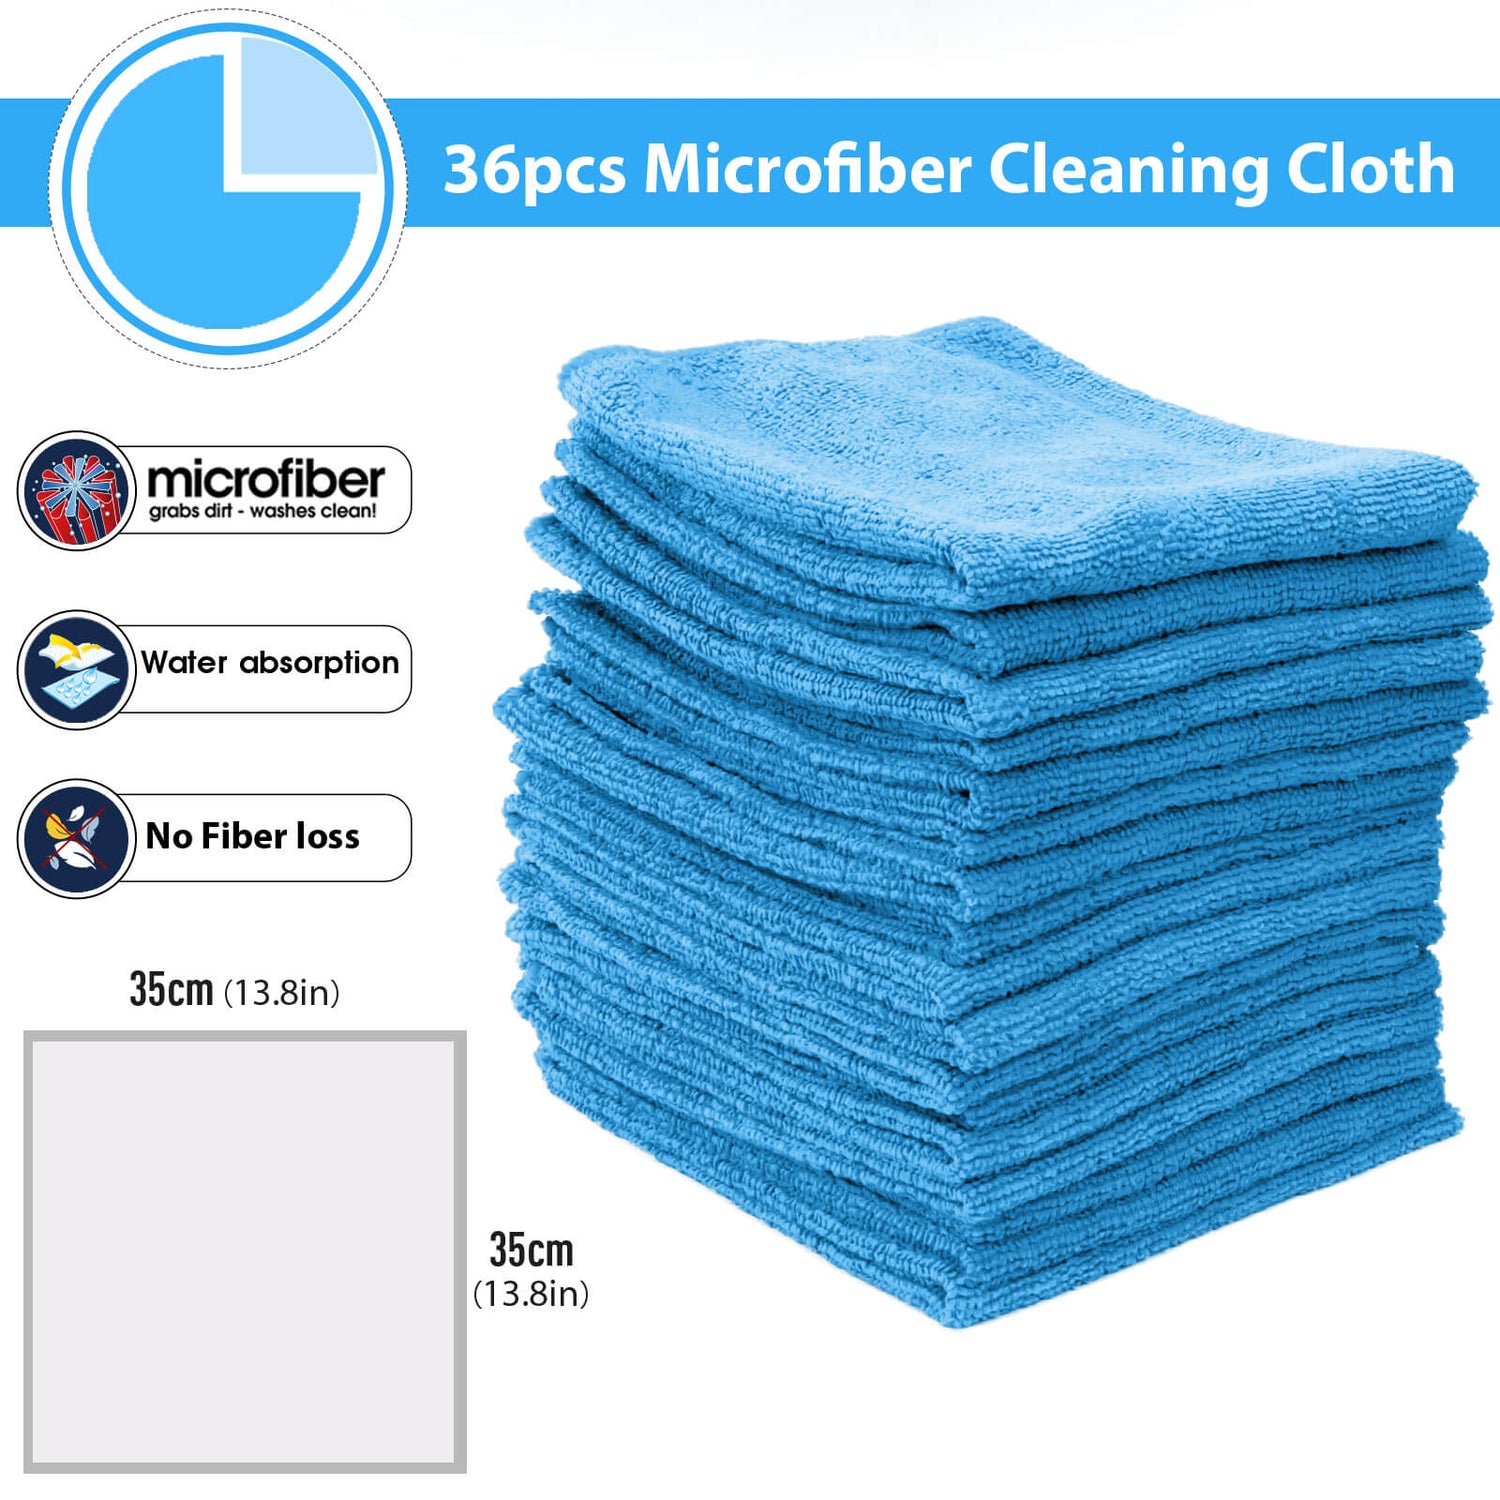 Dustgo Microfibre Cleaning Cloth for Office Surfaces - Part No. BMT-D5